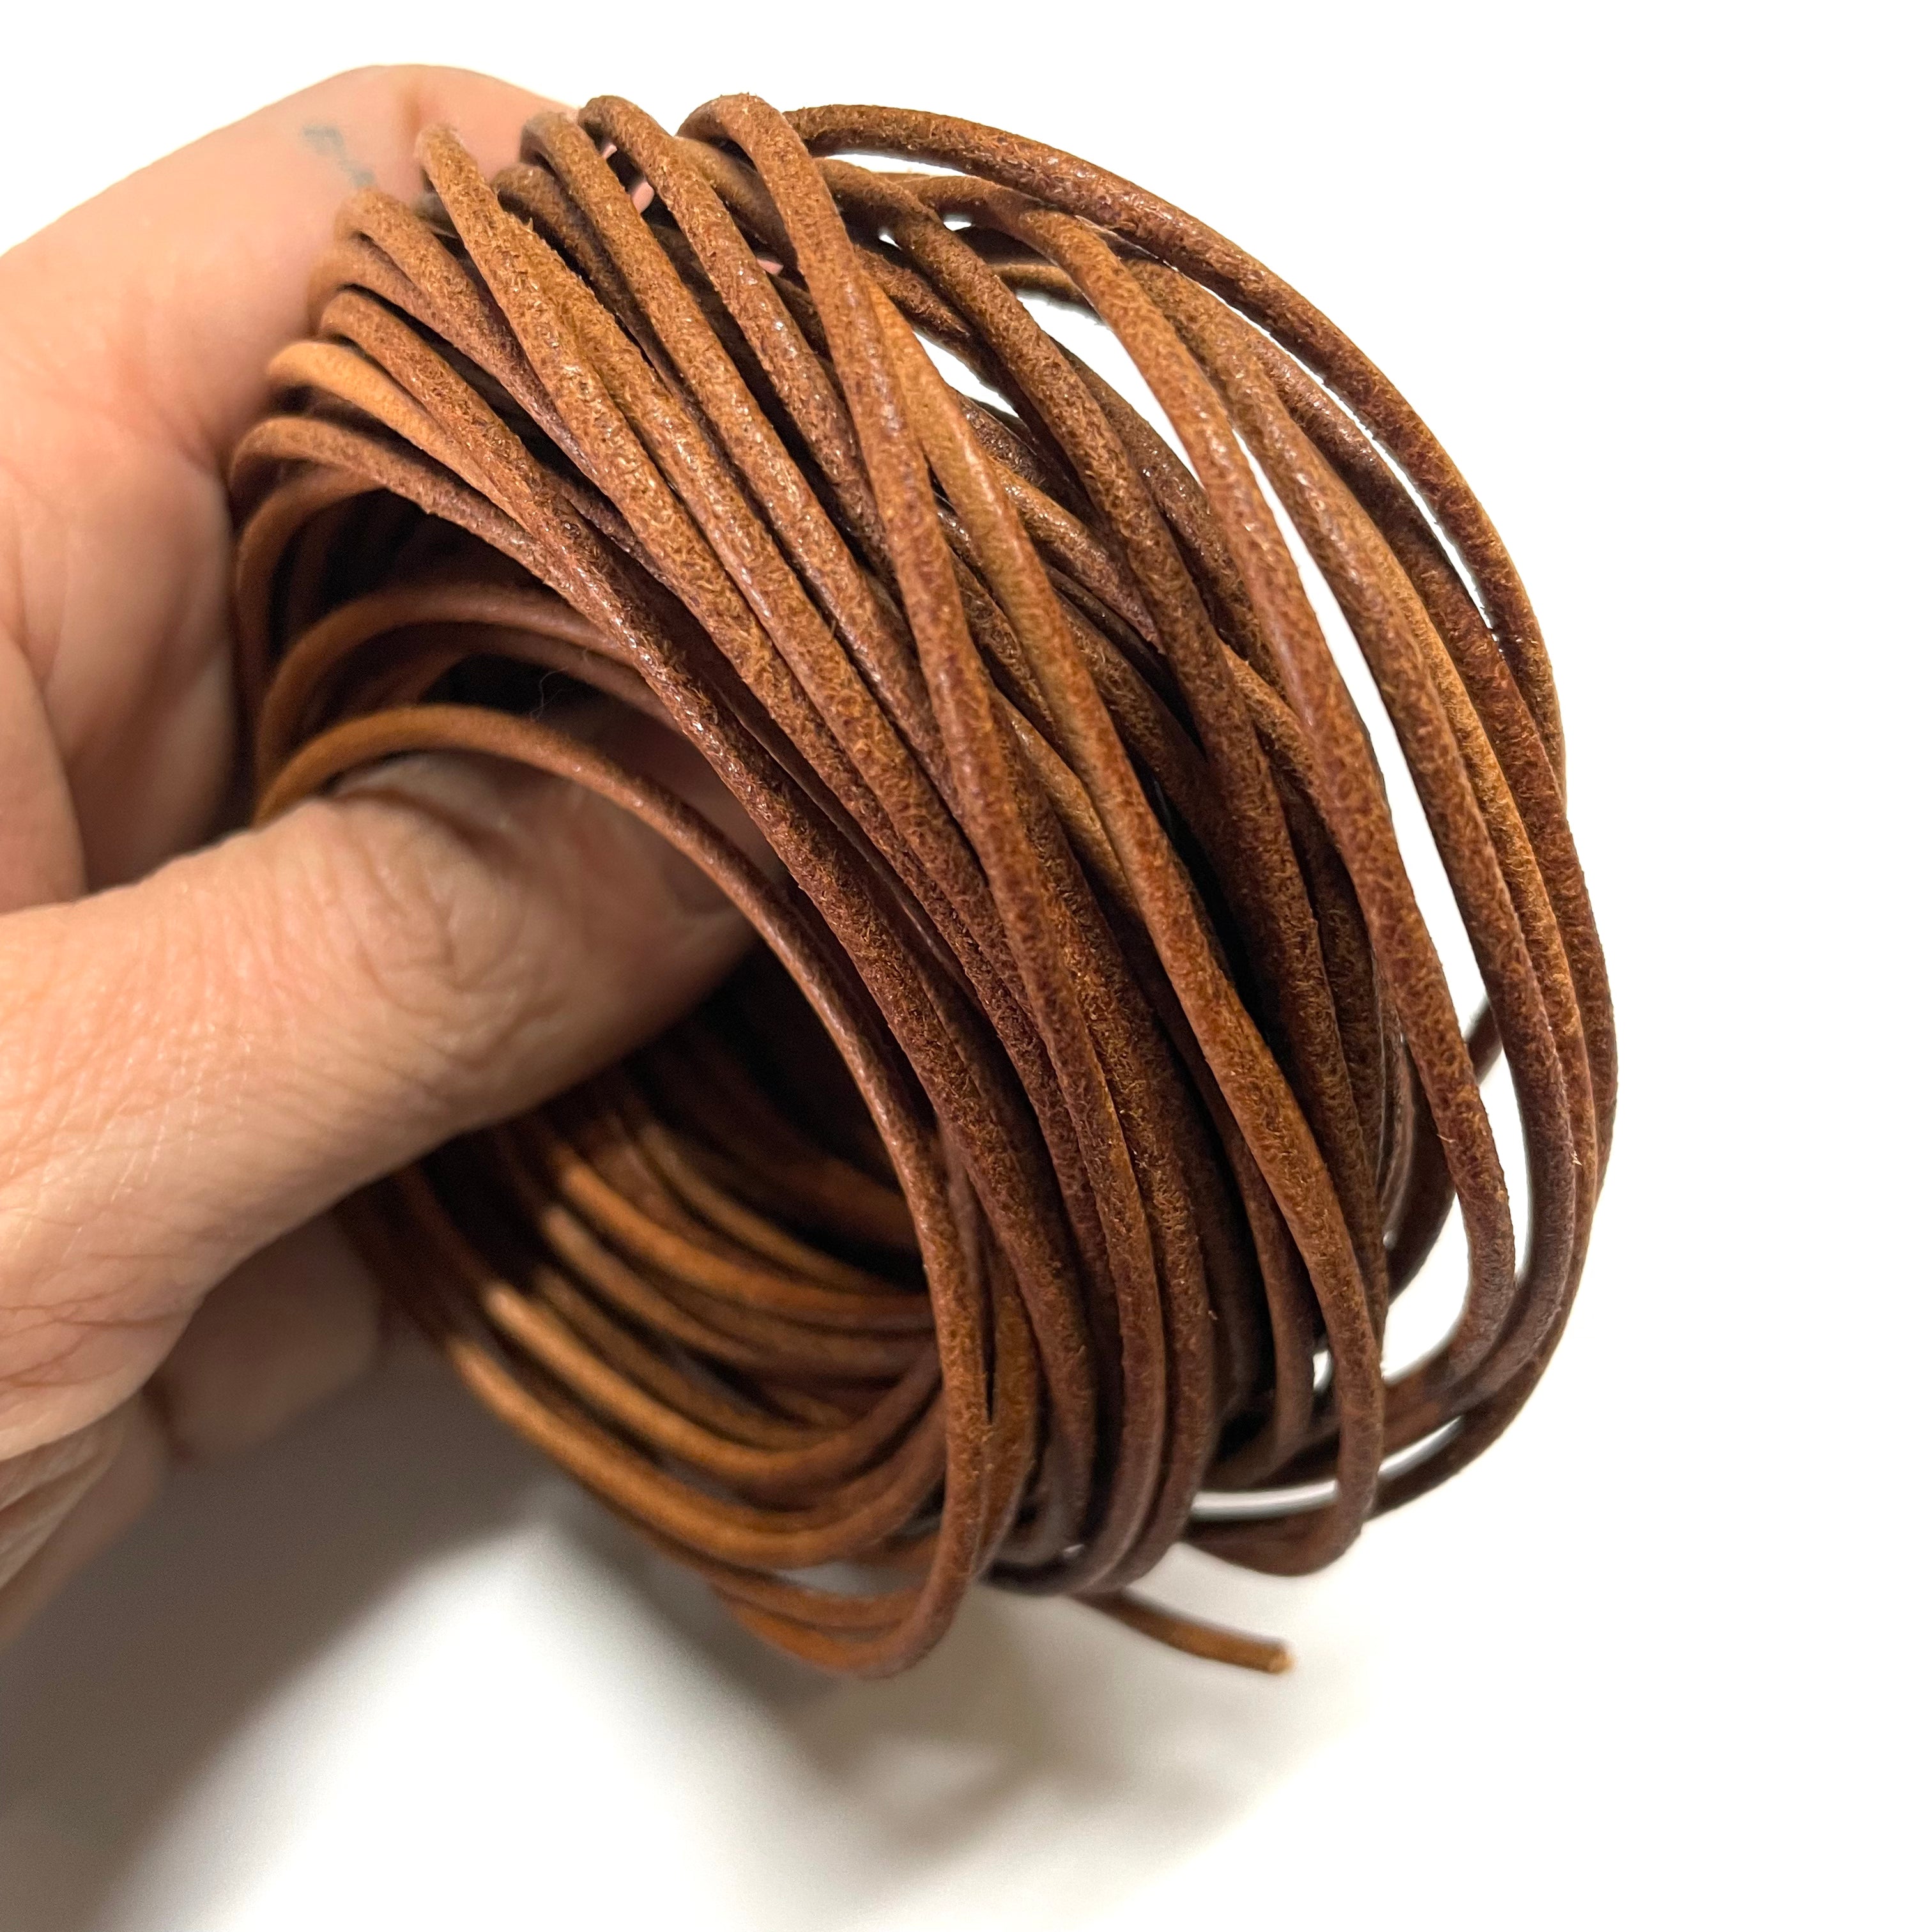 Natural Genuine Leather Cord per 10mtrs - Natural Tan Brown 2mm